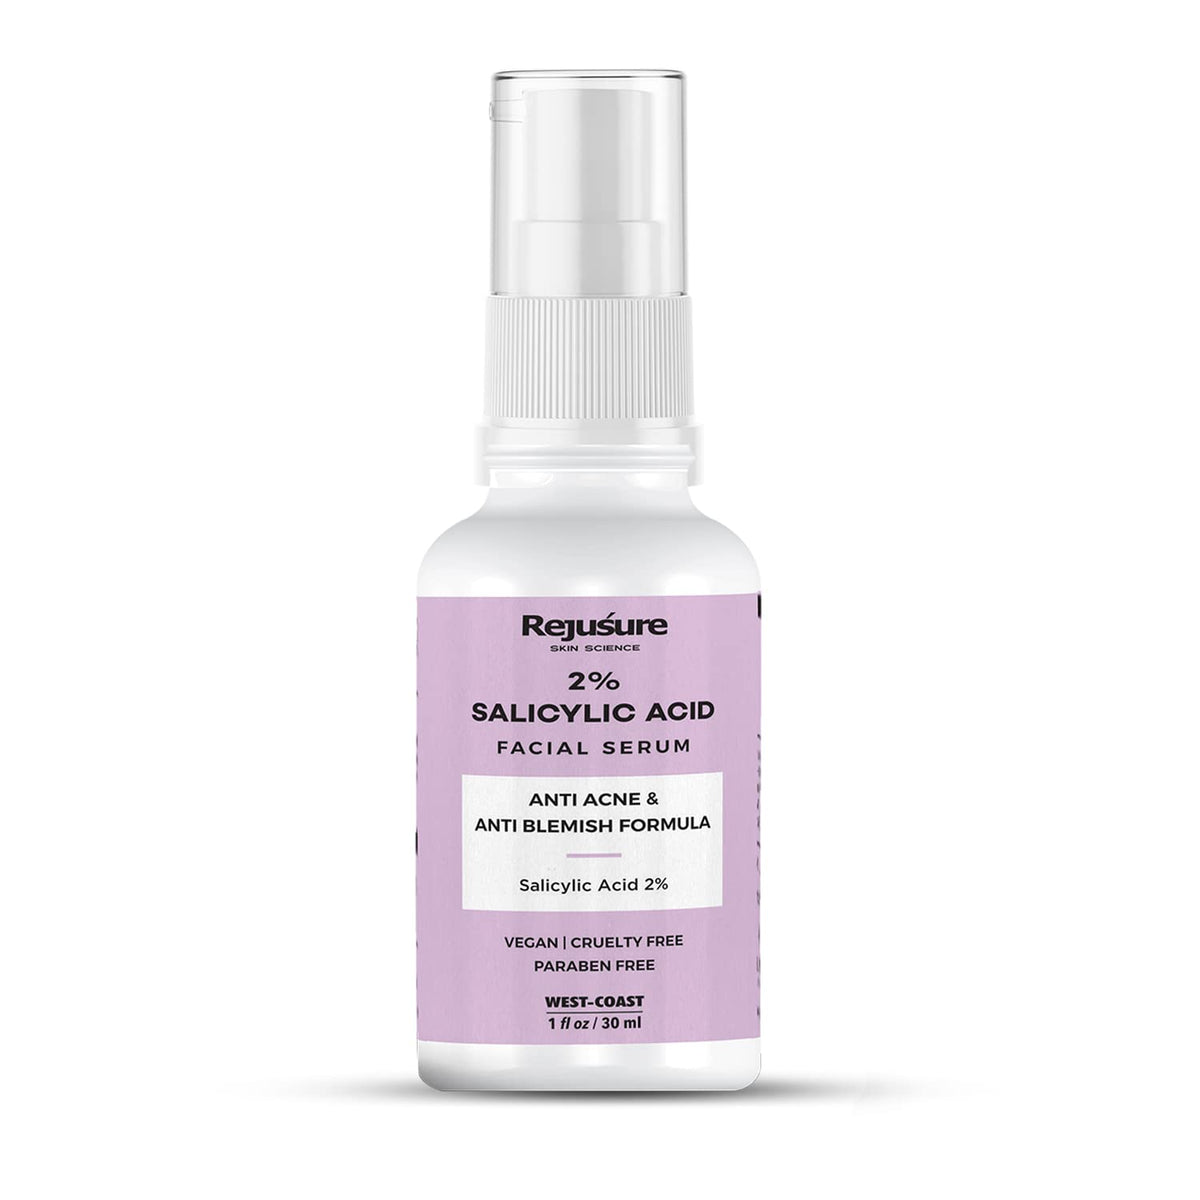 Rejusure 2% Salicylic Acid Acne Care (Face Serum) - Acne, Blackheads & Open Pores | Excess Oil - 30 ml